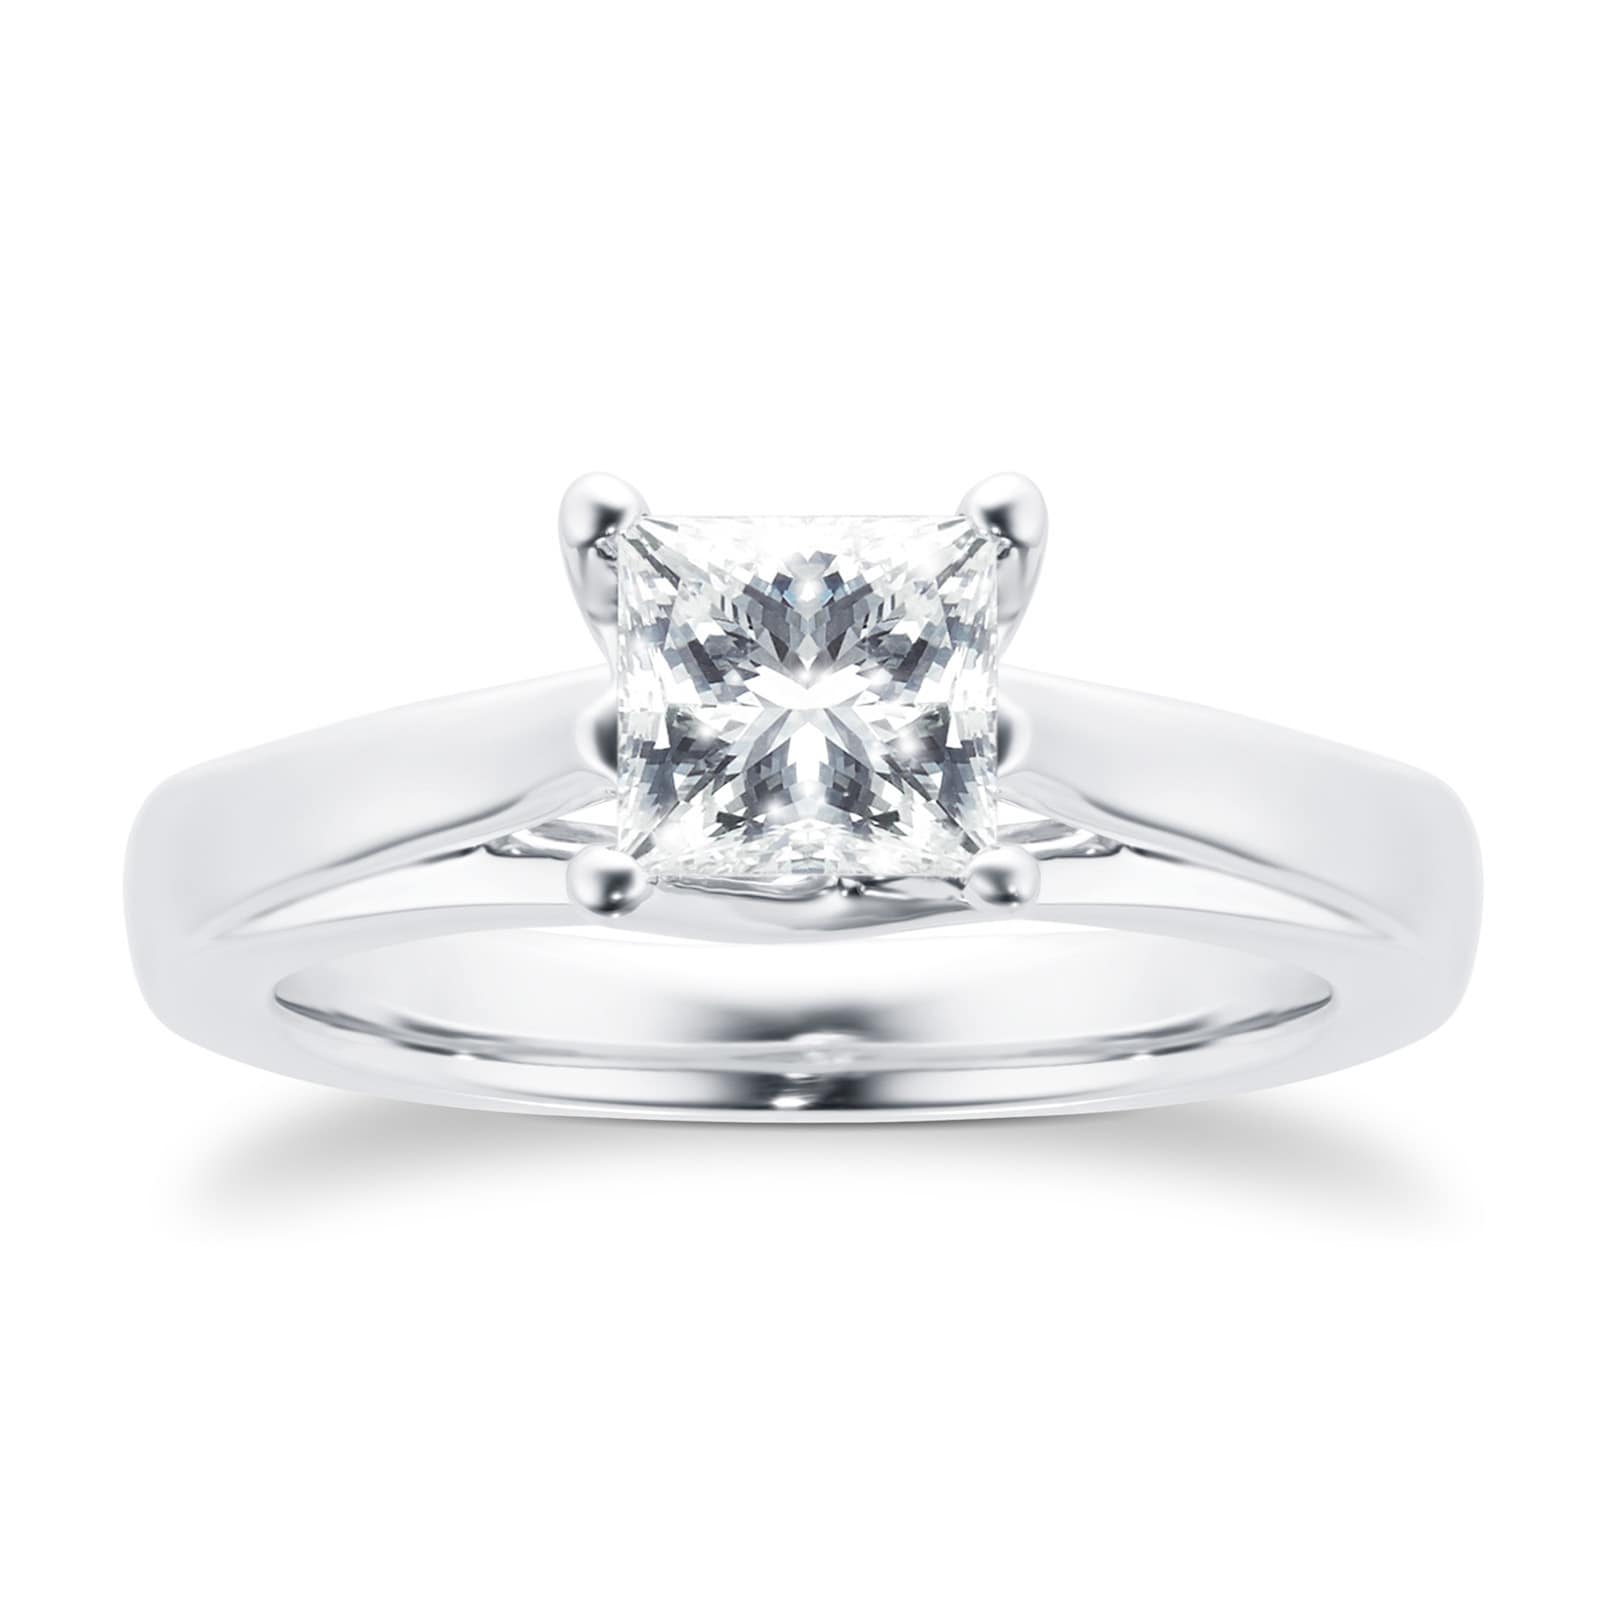 Platinum Princess Cut 1.00 Carat 88 Facet Diamond Ring - Ring Size G